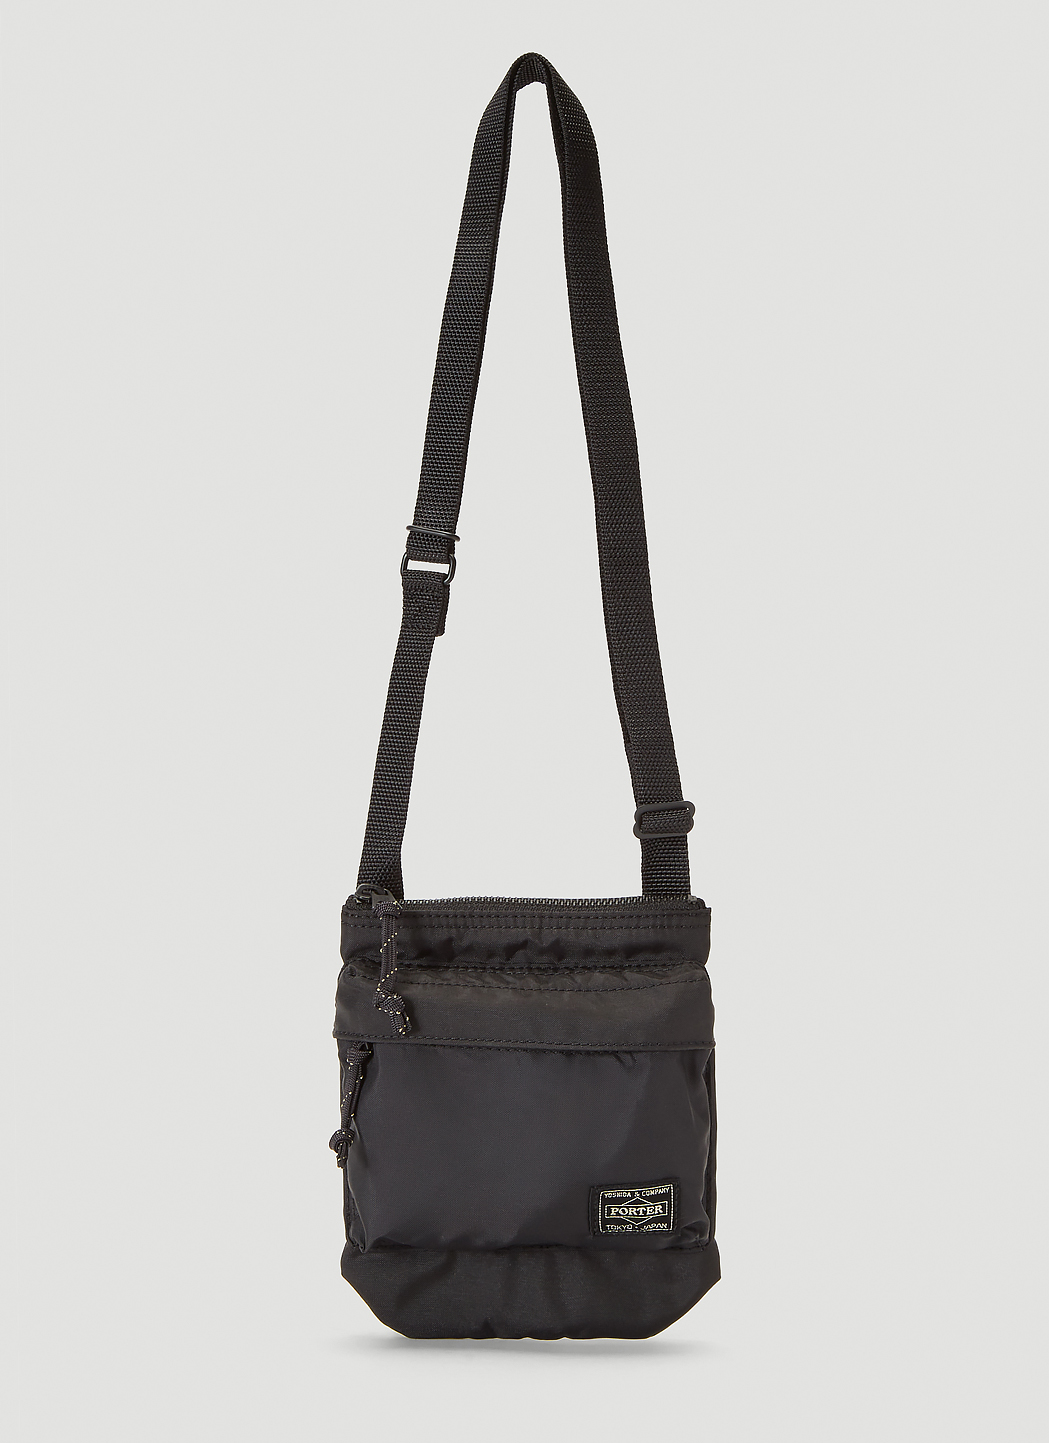 Porter-Yoshida & Co. Shoulder Pouch Bag | LN-CC